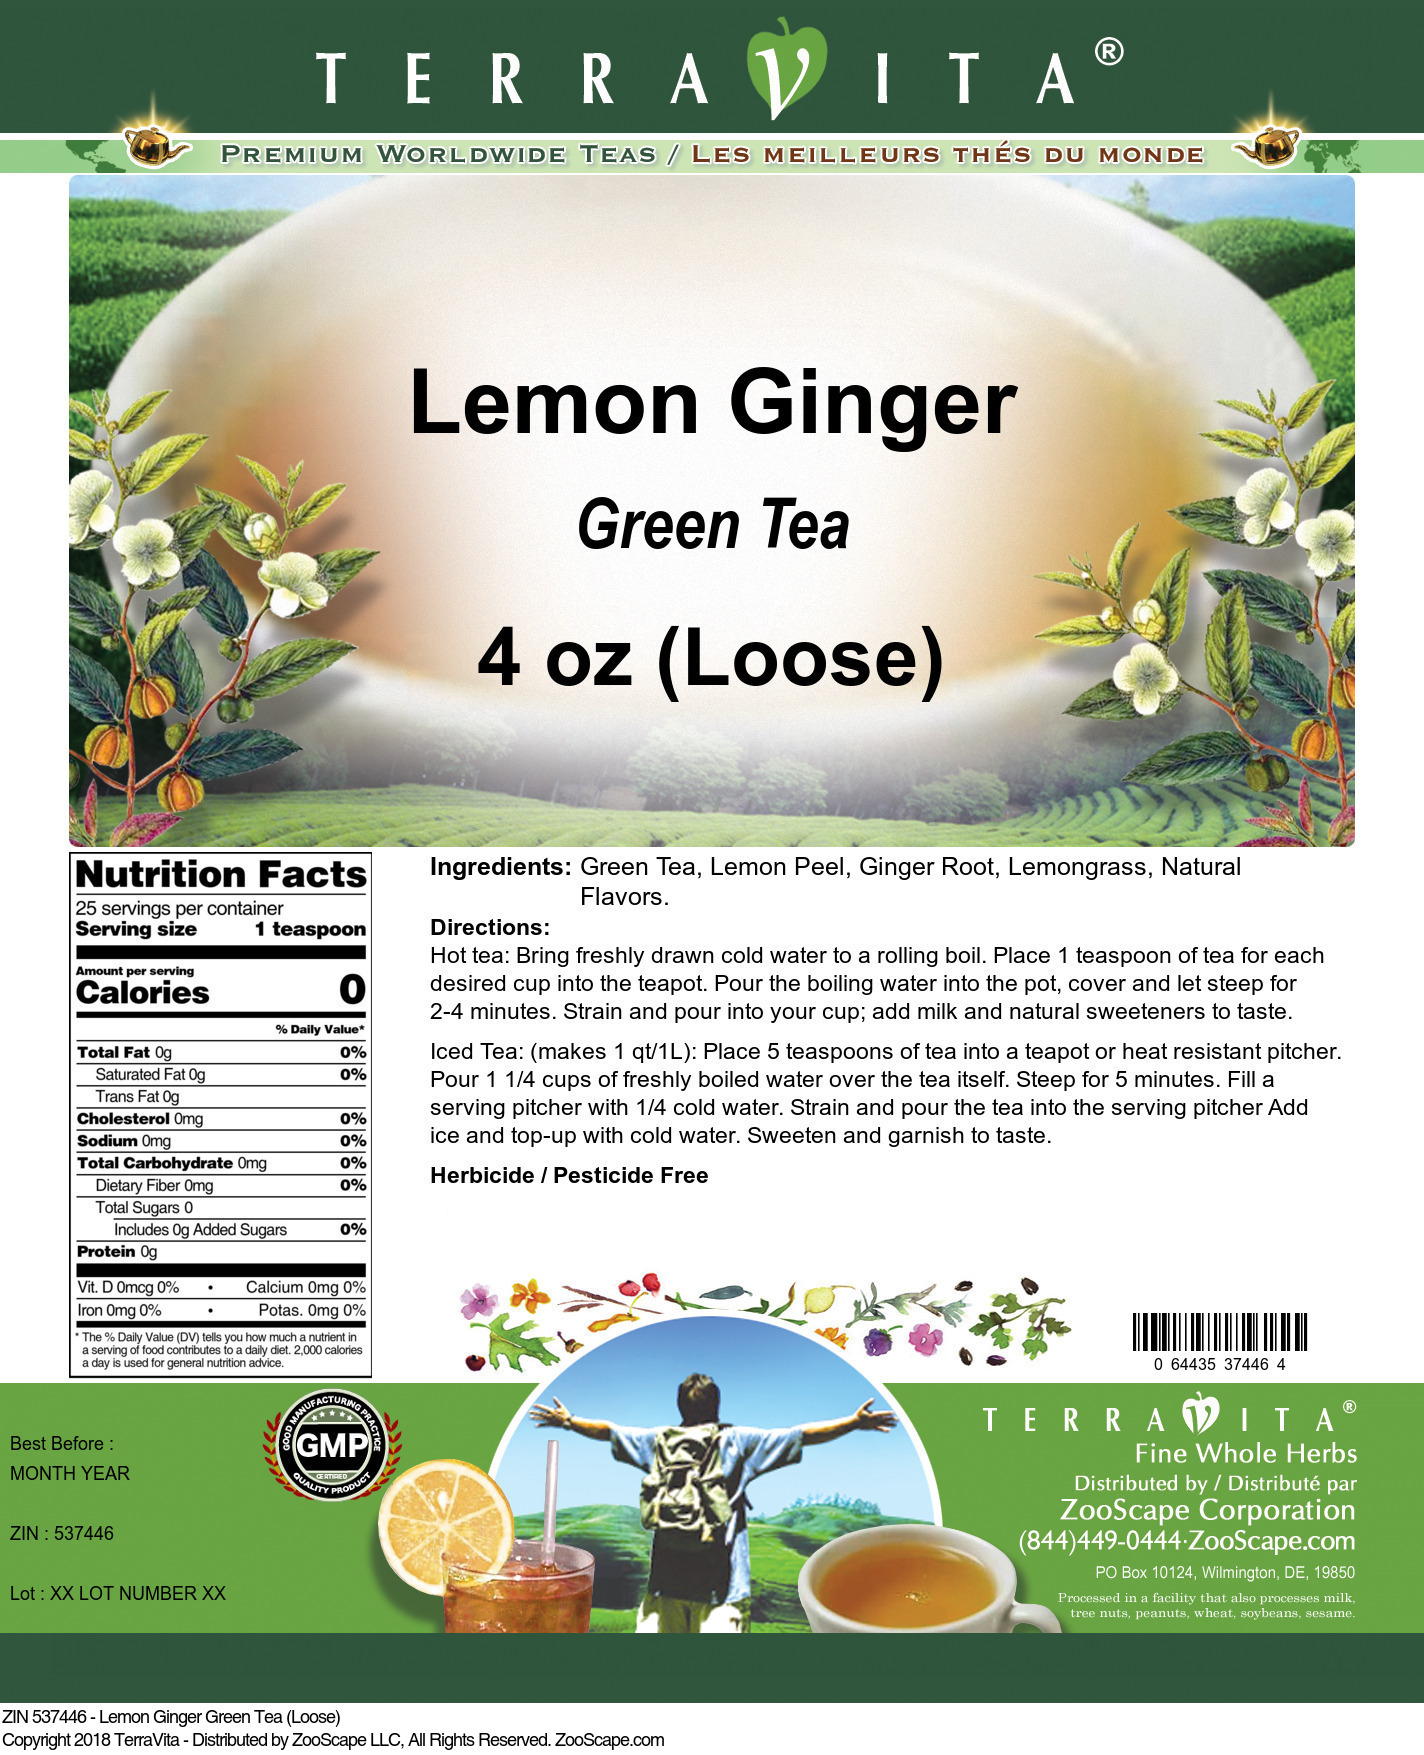 Lemon Ginger Green Tea (Loose) - Label